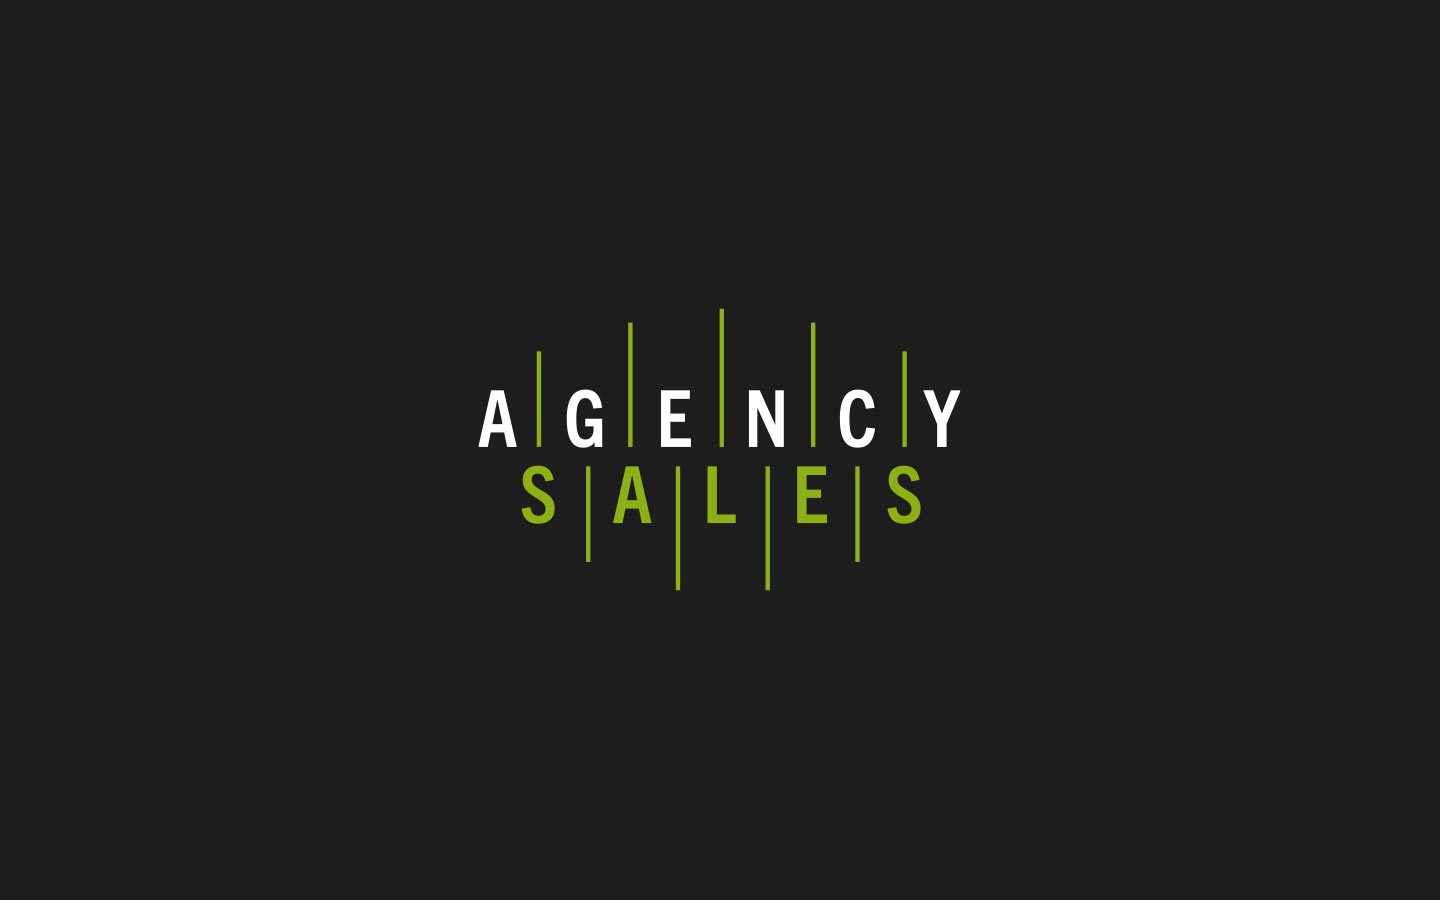 Agency sales logo